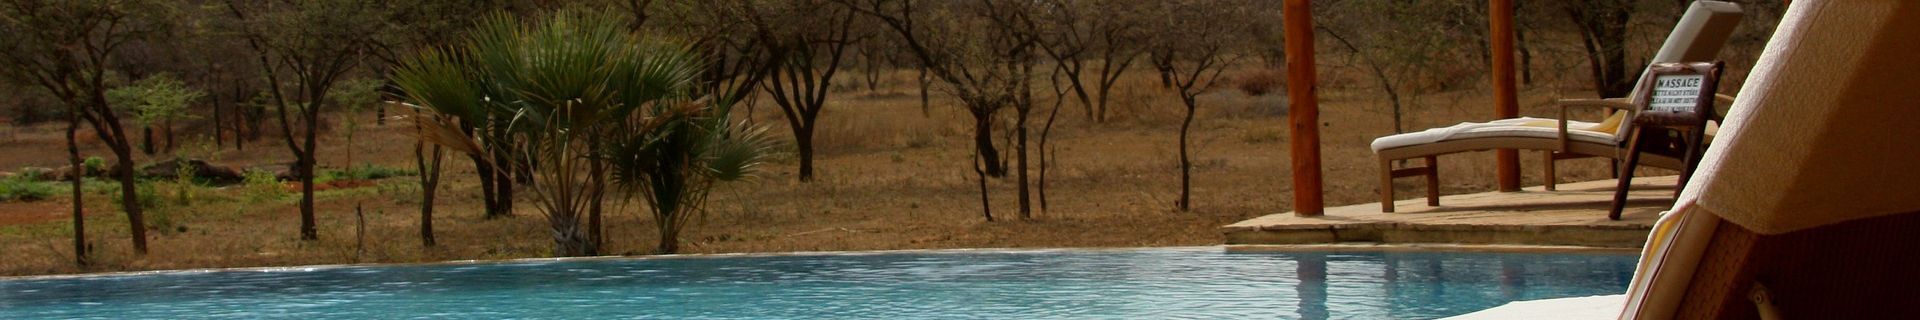 Luxus Lodge mit Pool Nationalpark Tansania